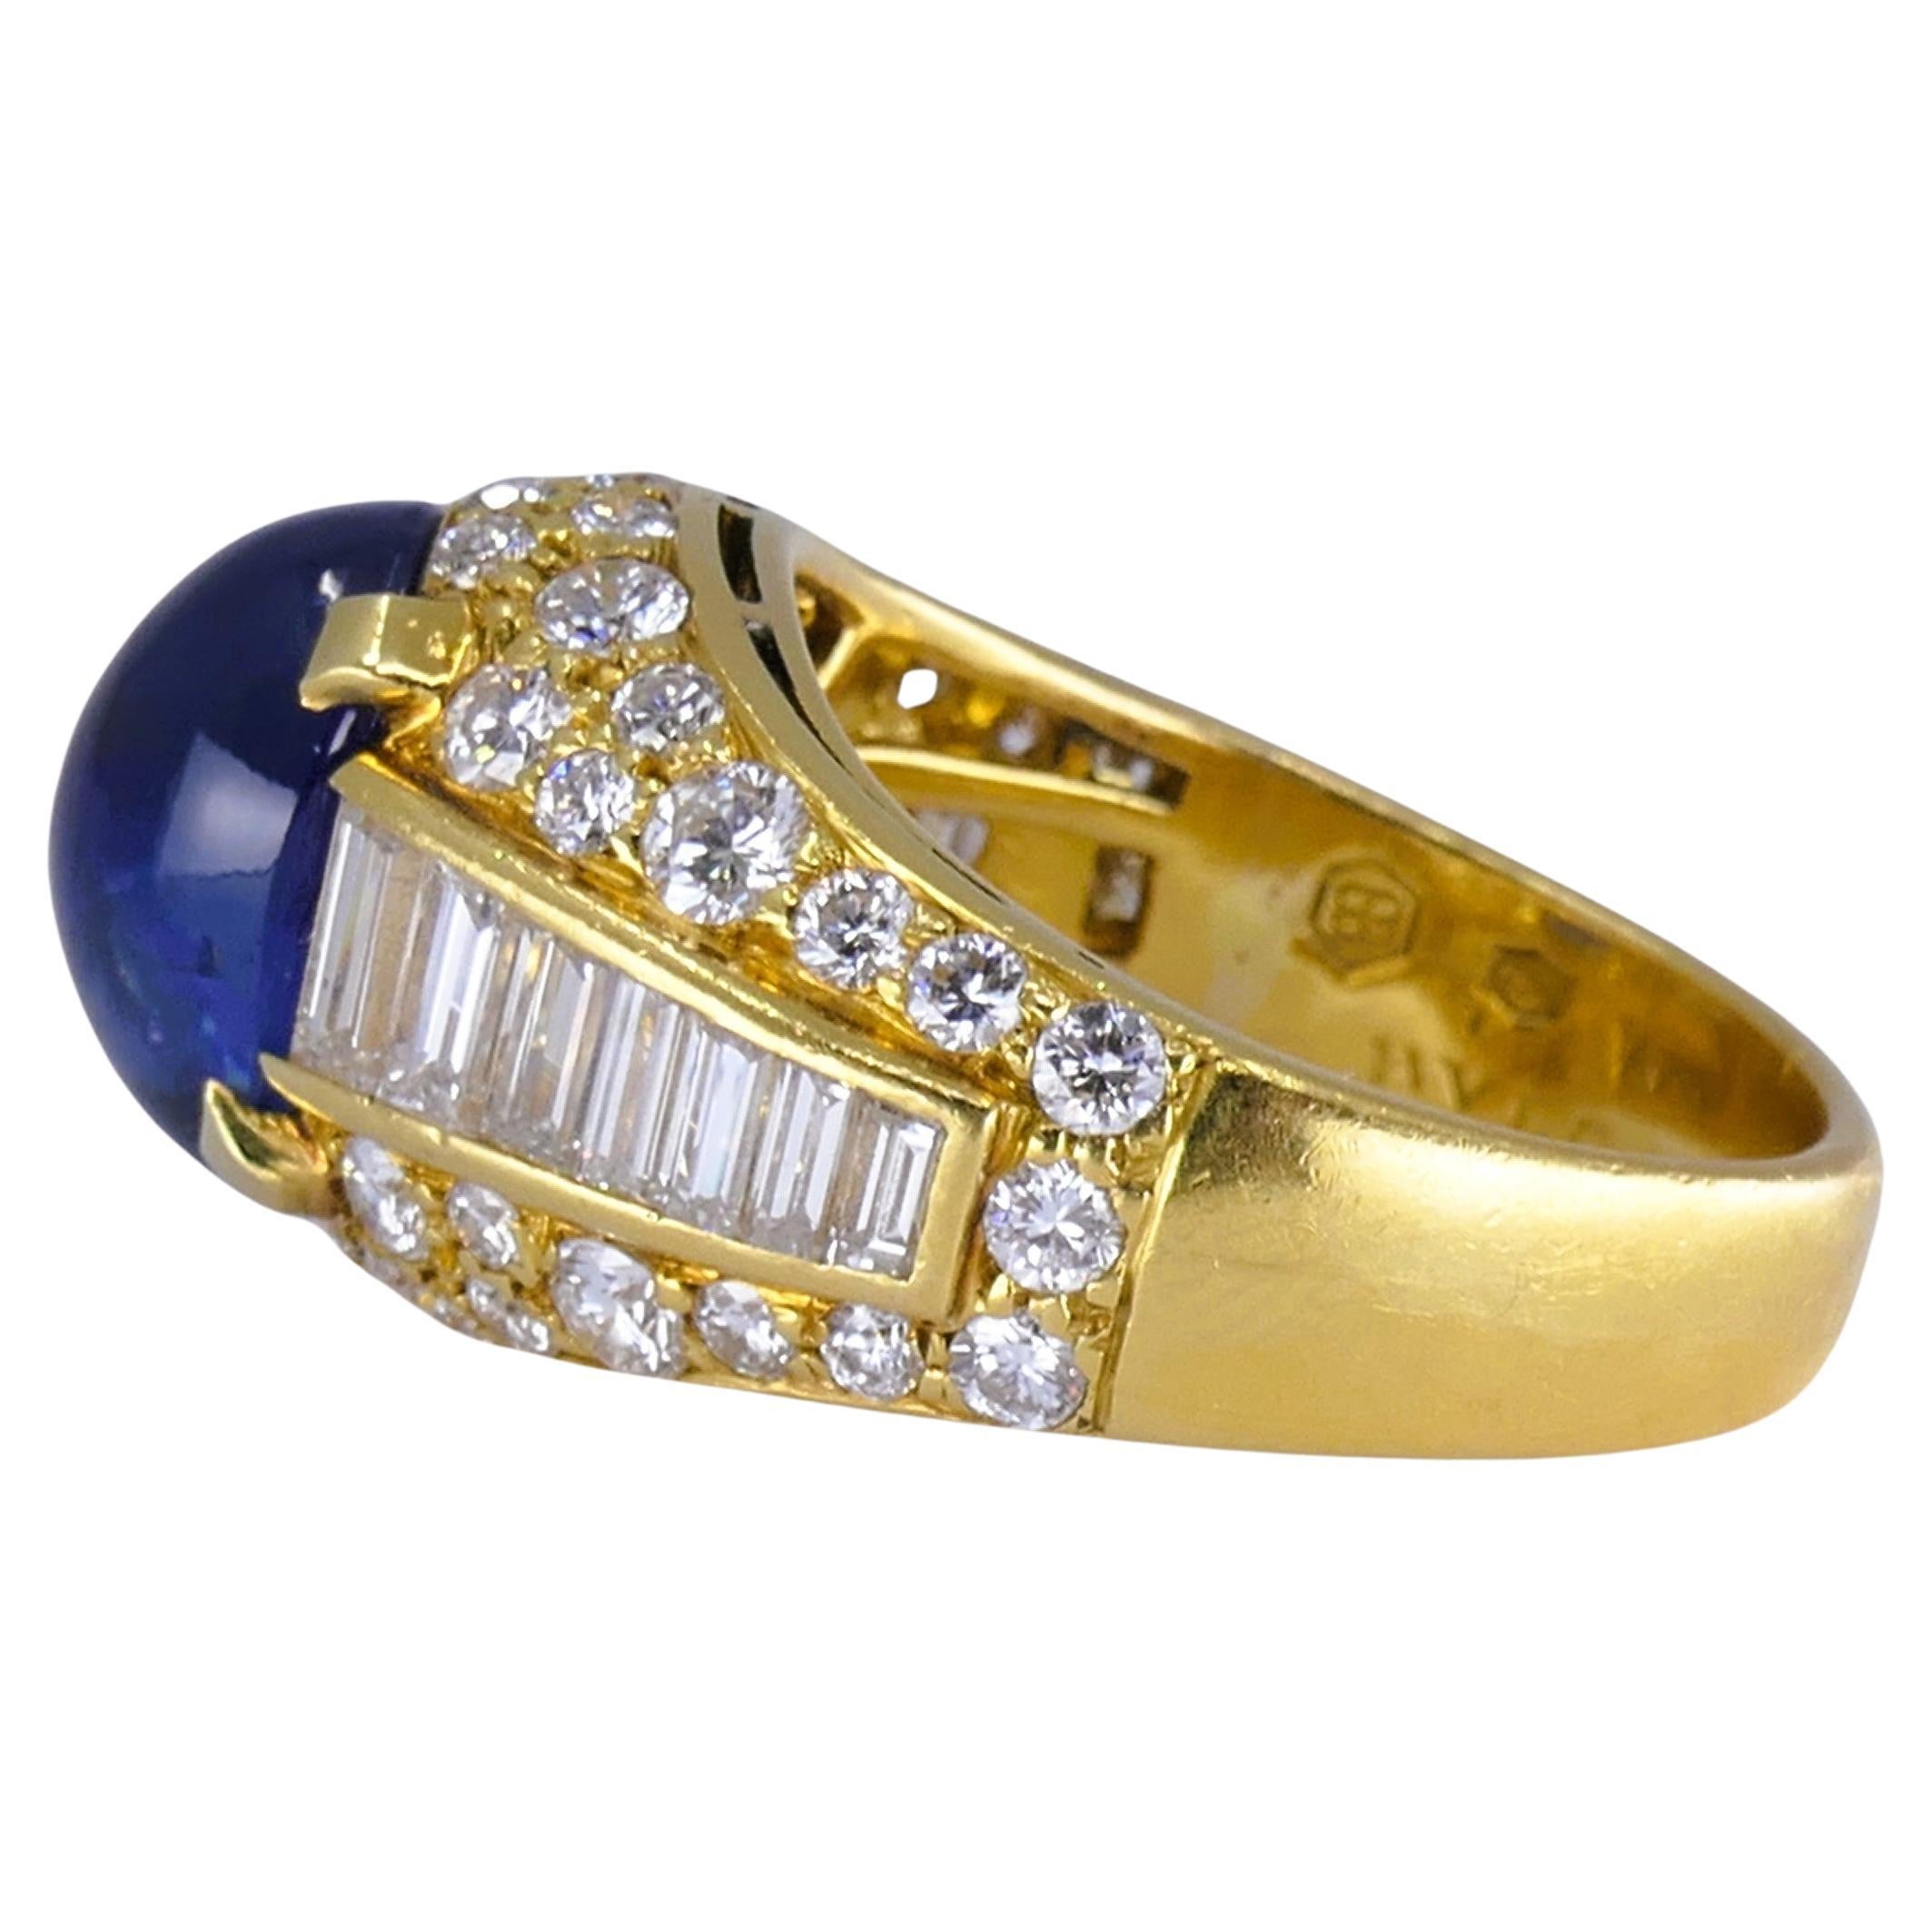 Vintage Bulgari Trombino Ring Sapphire Diamond Gold 18k Estate Jewelry For Sale 2